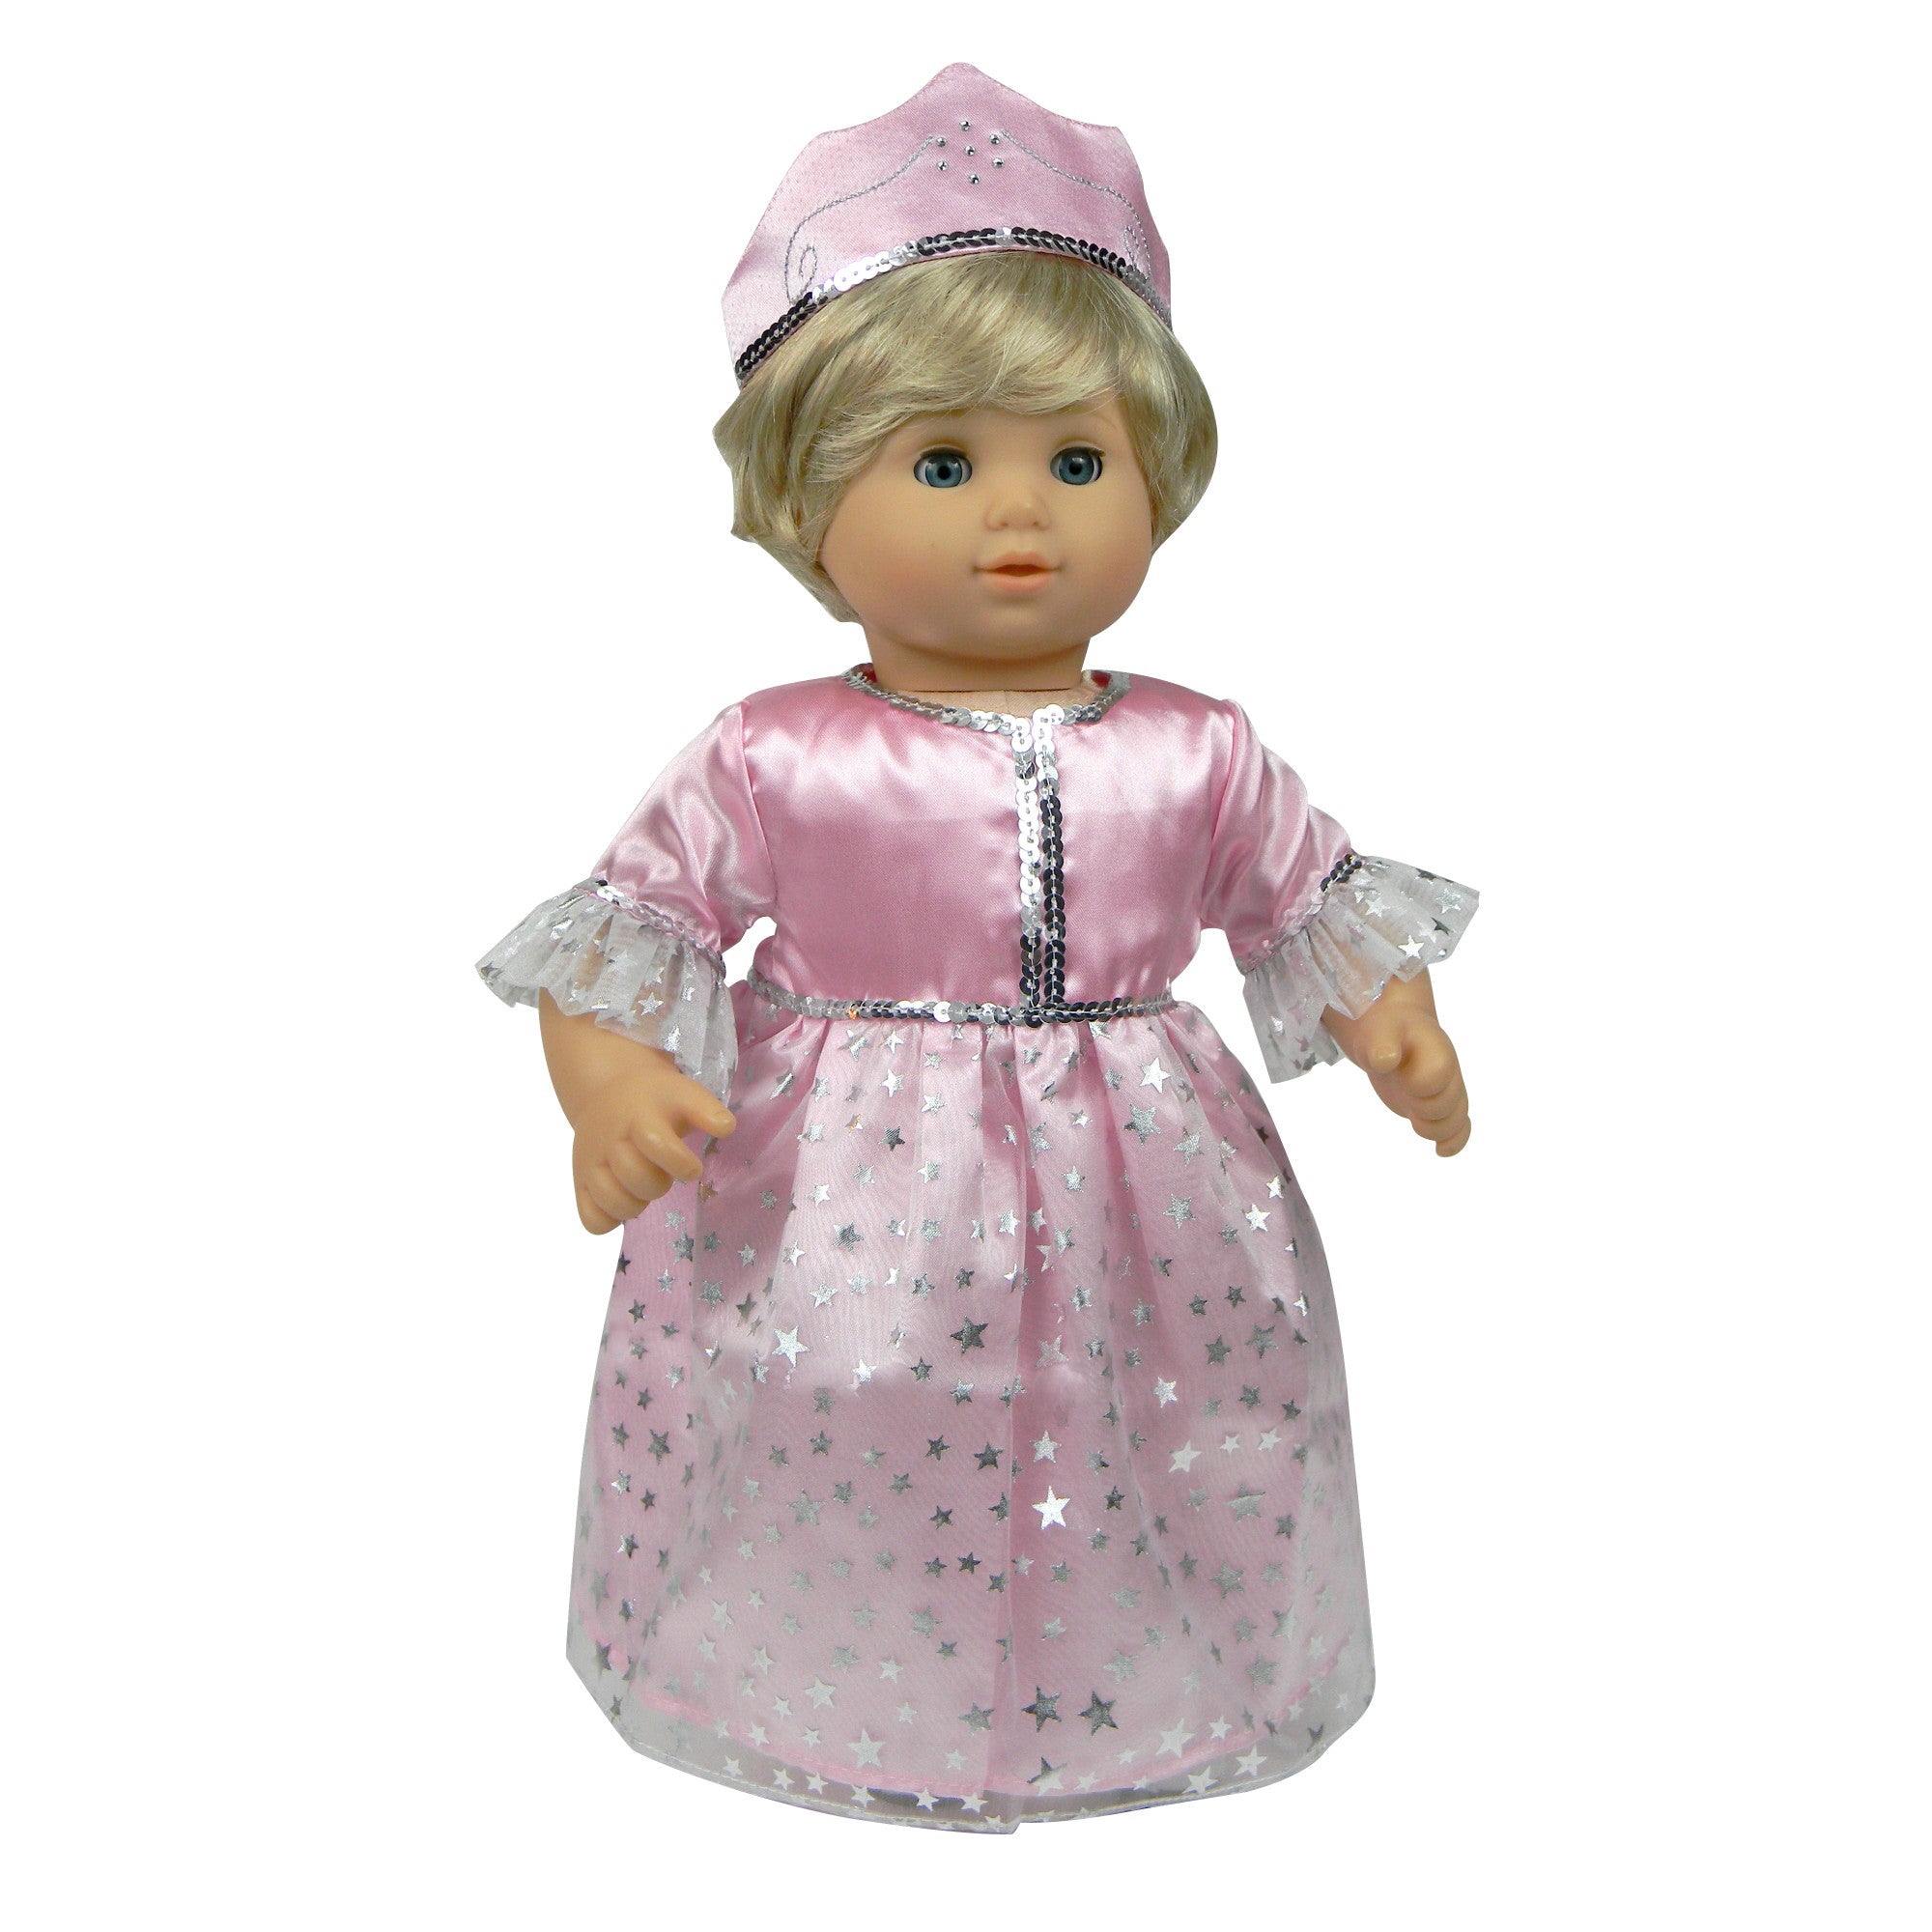 Sophia’s Princess Dress & Matching Crown Costume Set for 15” Baby Dolls, Light Pink